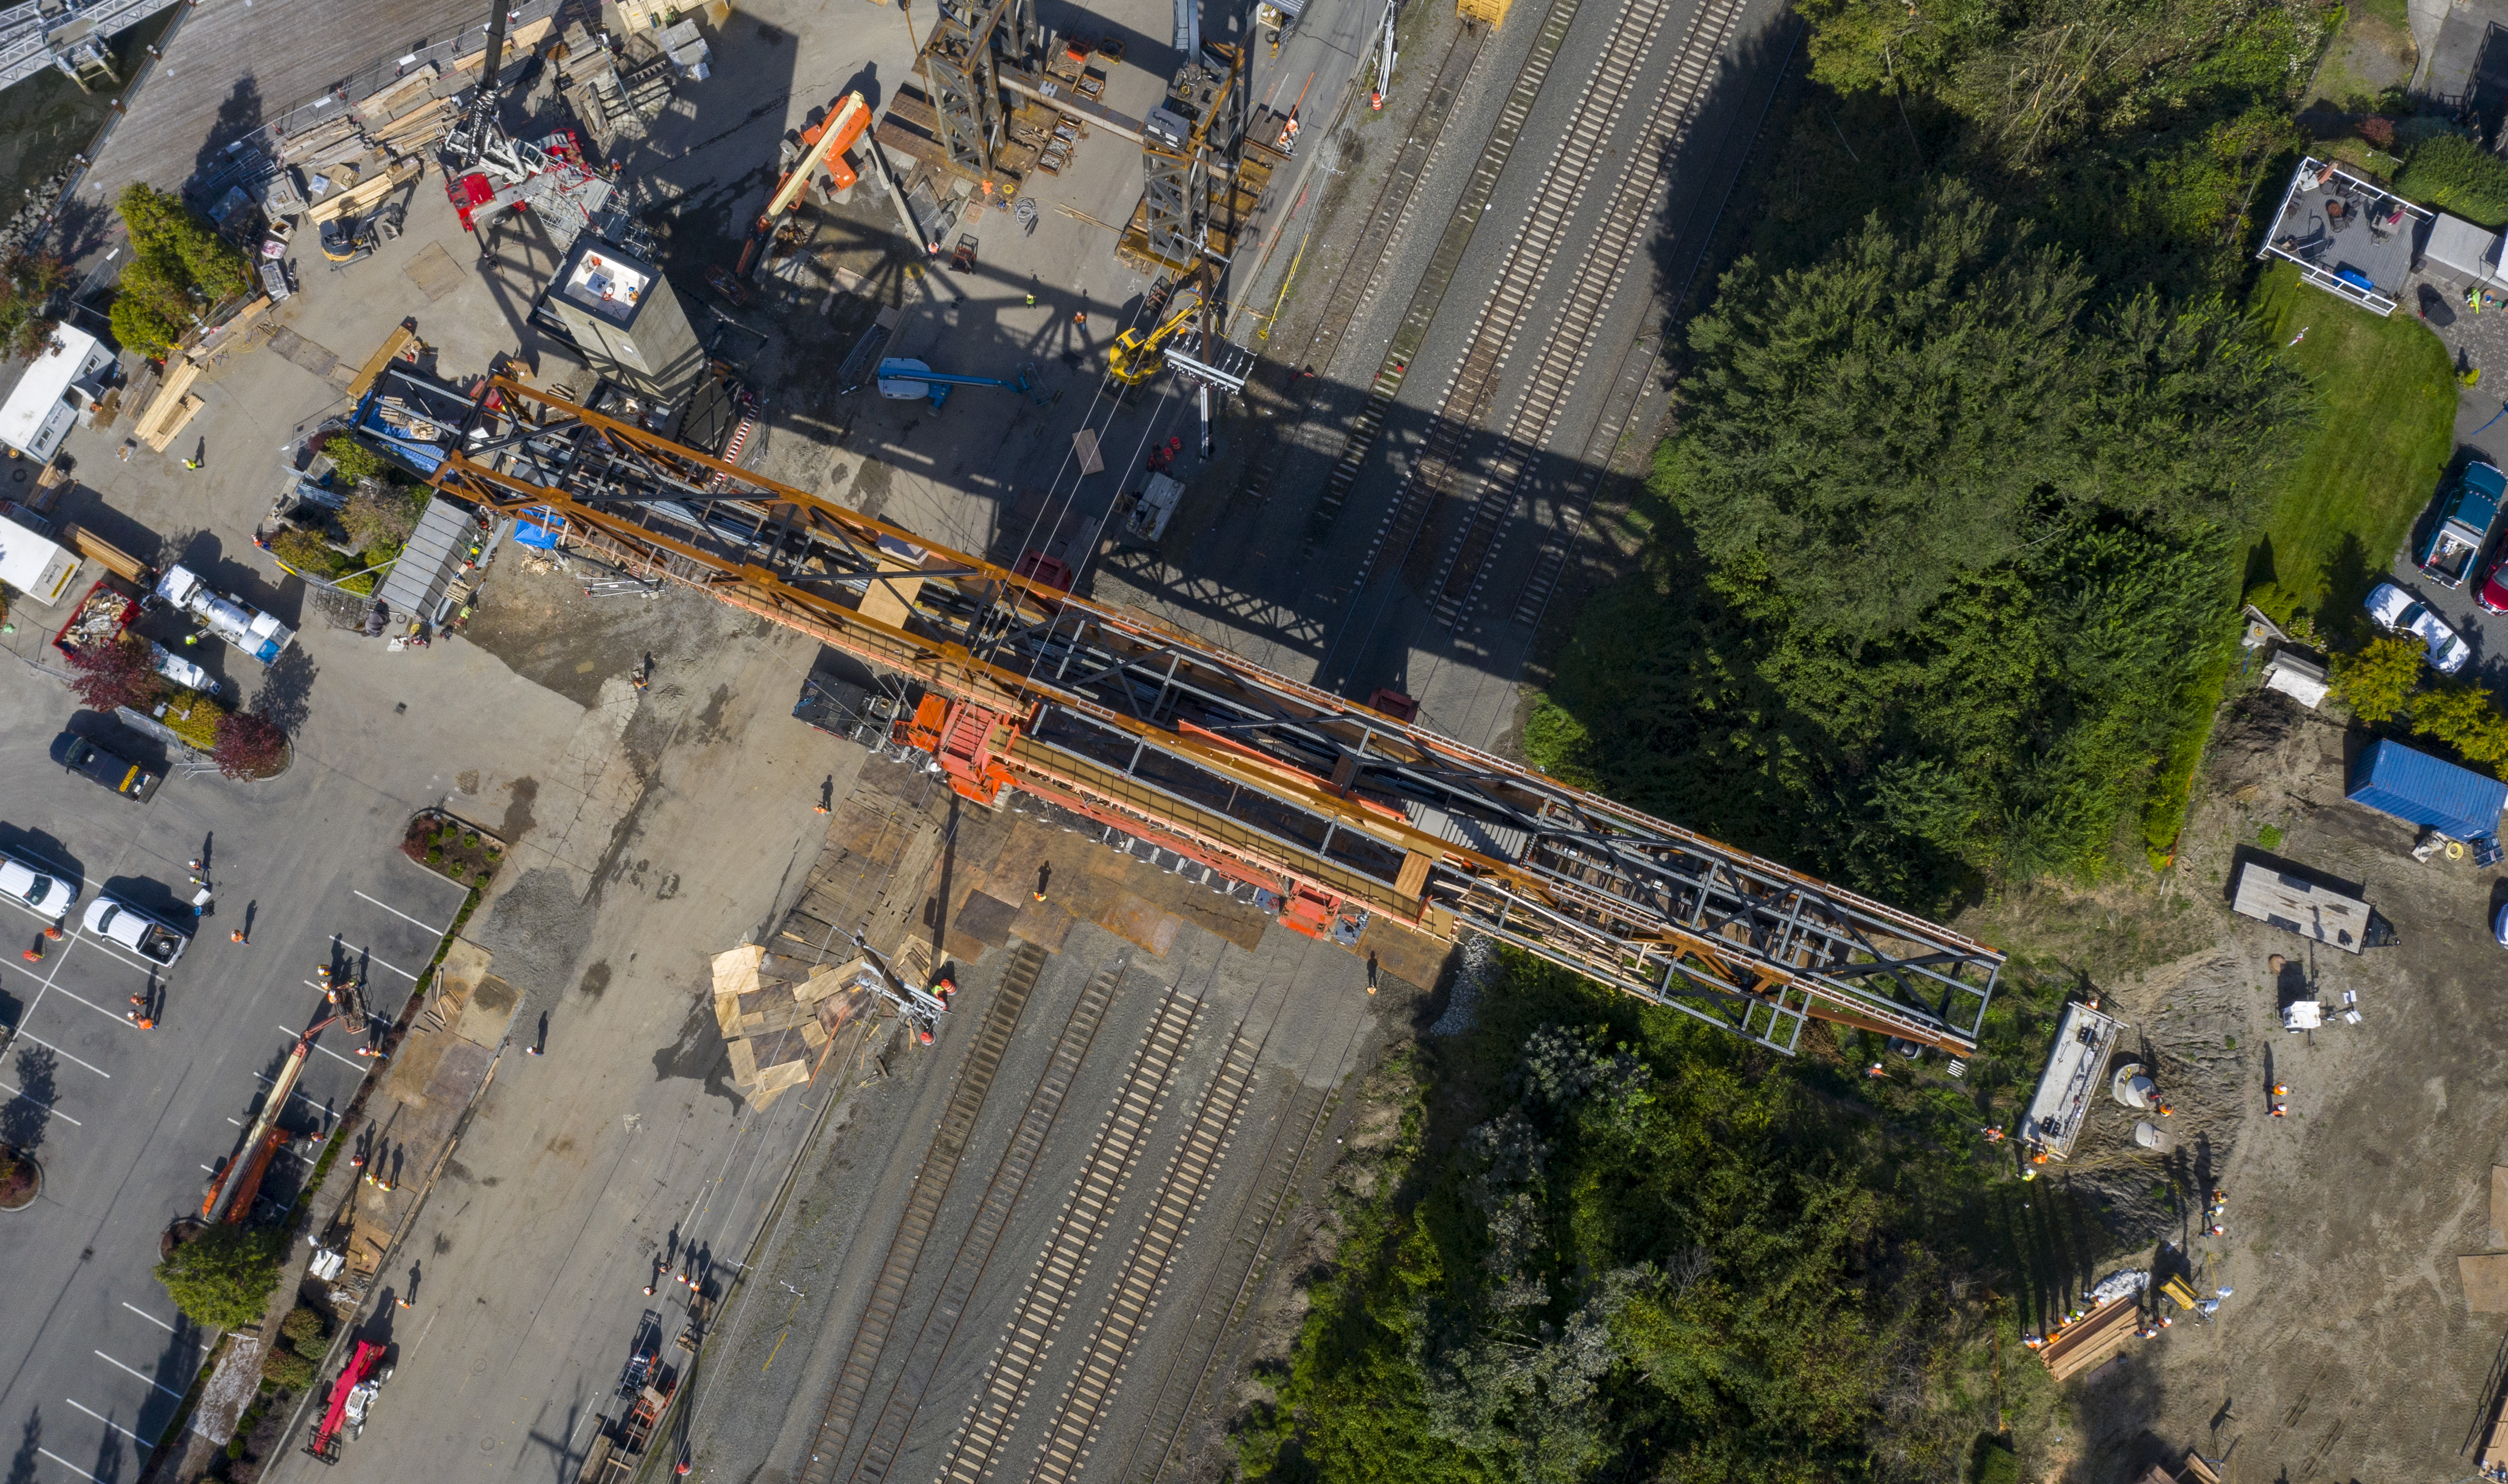 Aerial view of the new Everett Grand Avenue Pedestrian Bridge during the construction installation. Image copyright Adam Hunter/LMN Architects.